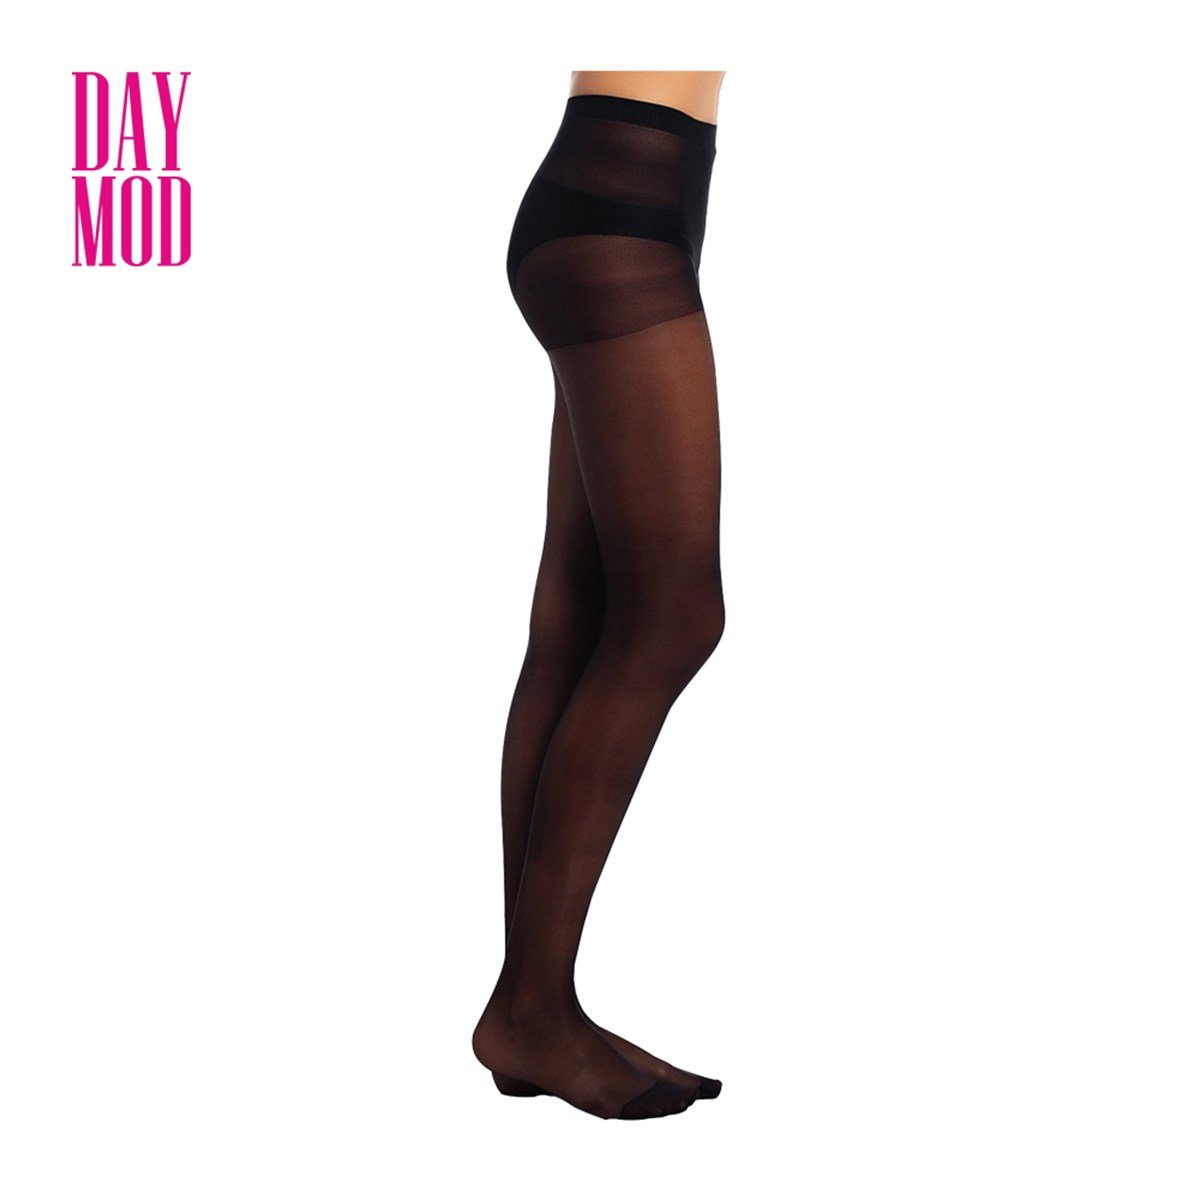 DayMod Lady Fit15 Külotlu Çorap 500/Siyah Beden.2 - Platin